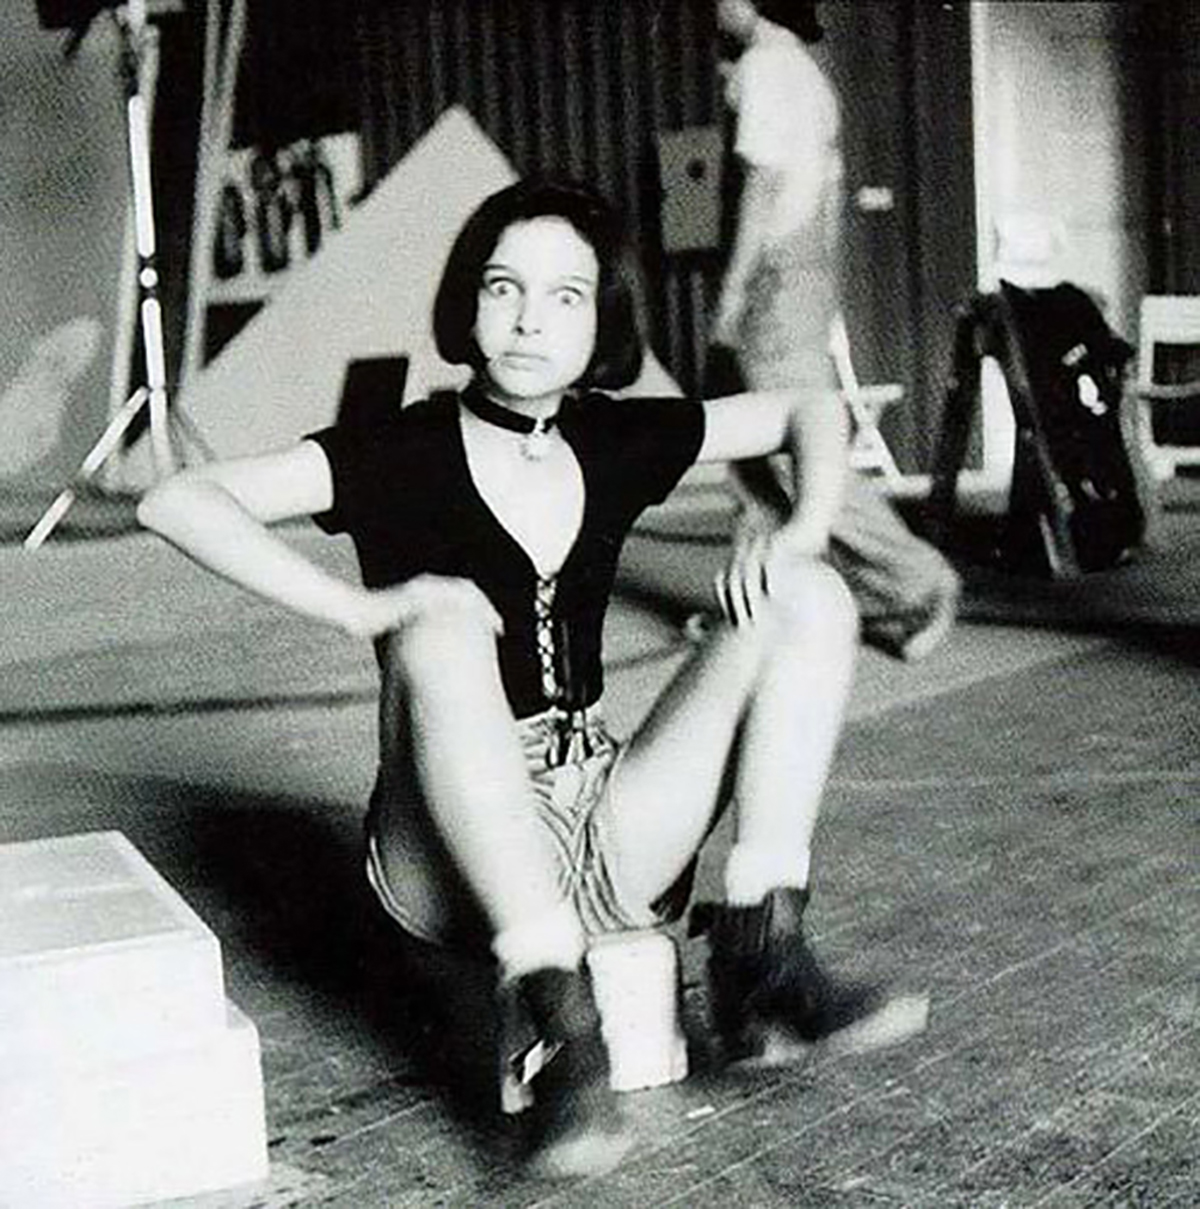 Natalie Portman goofing around on the set of Leon: The Professional (1994).